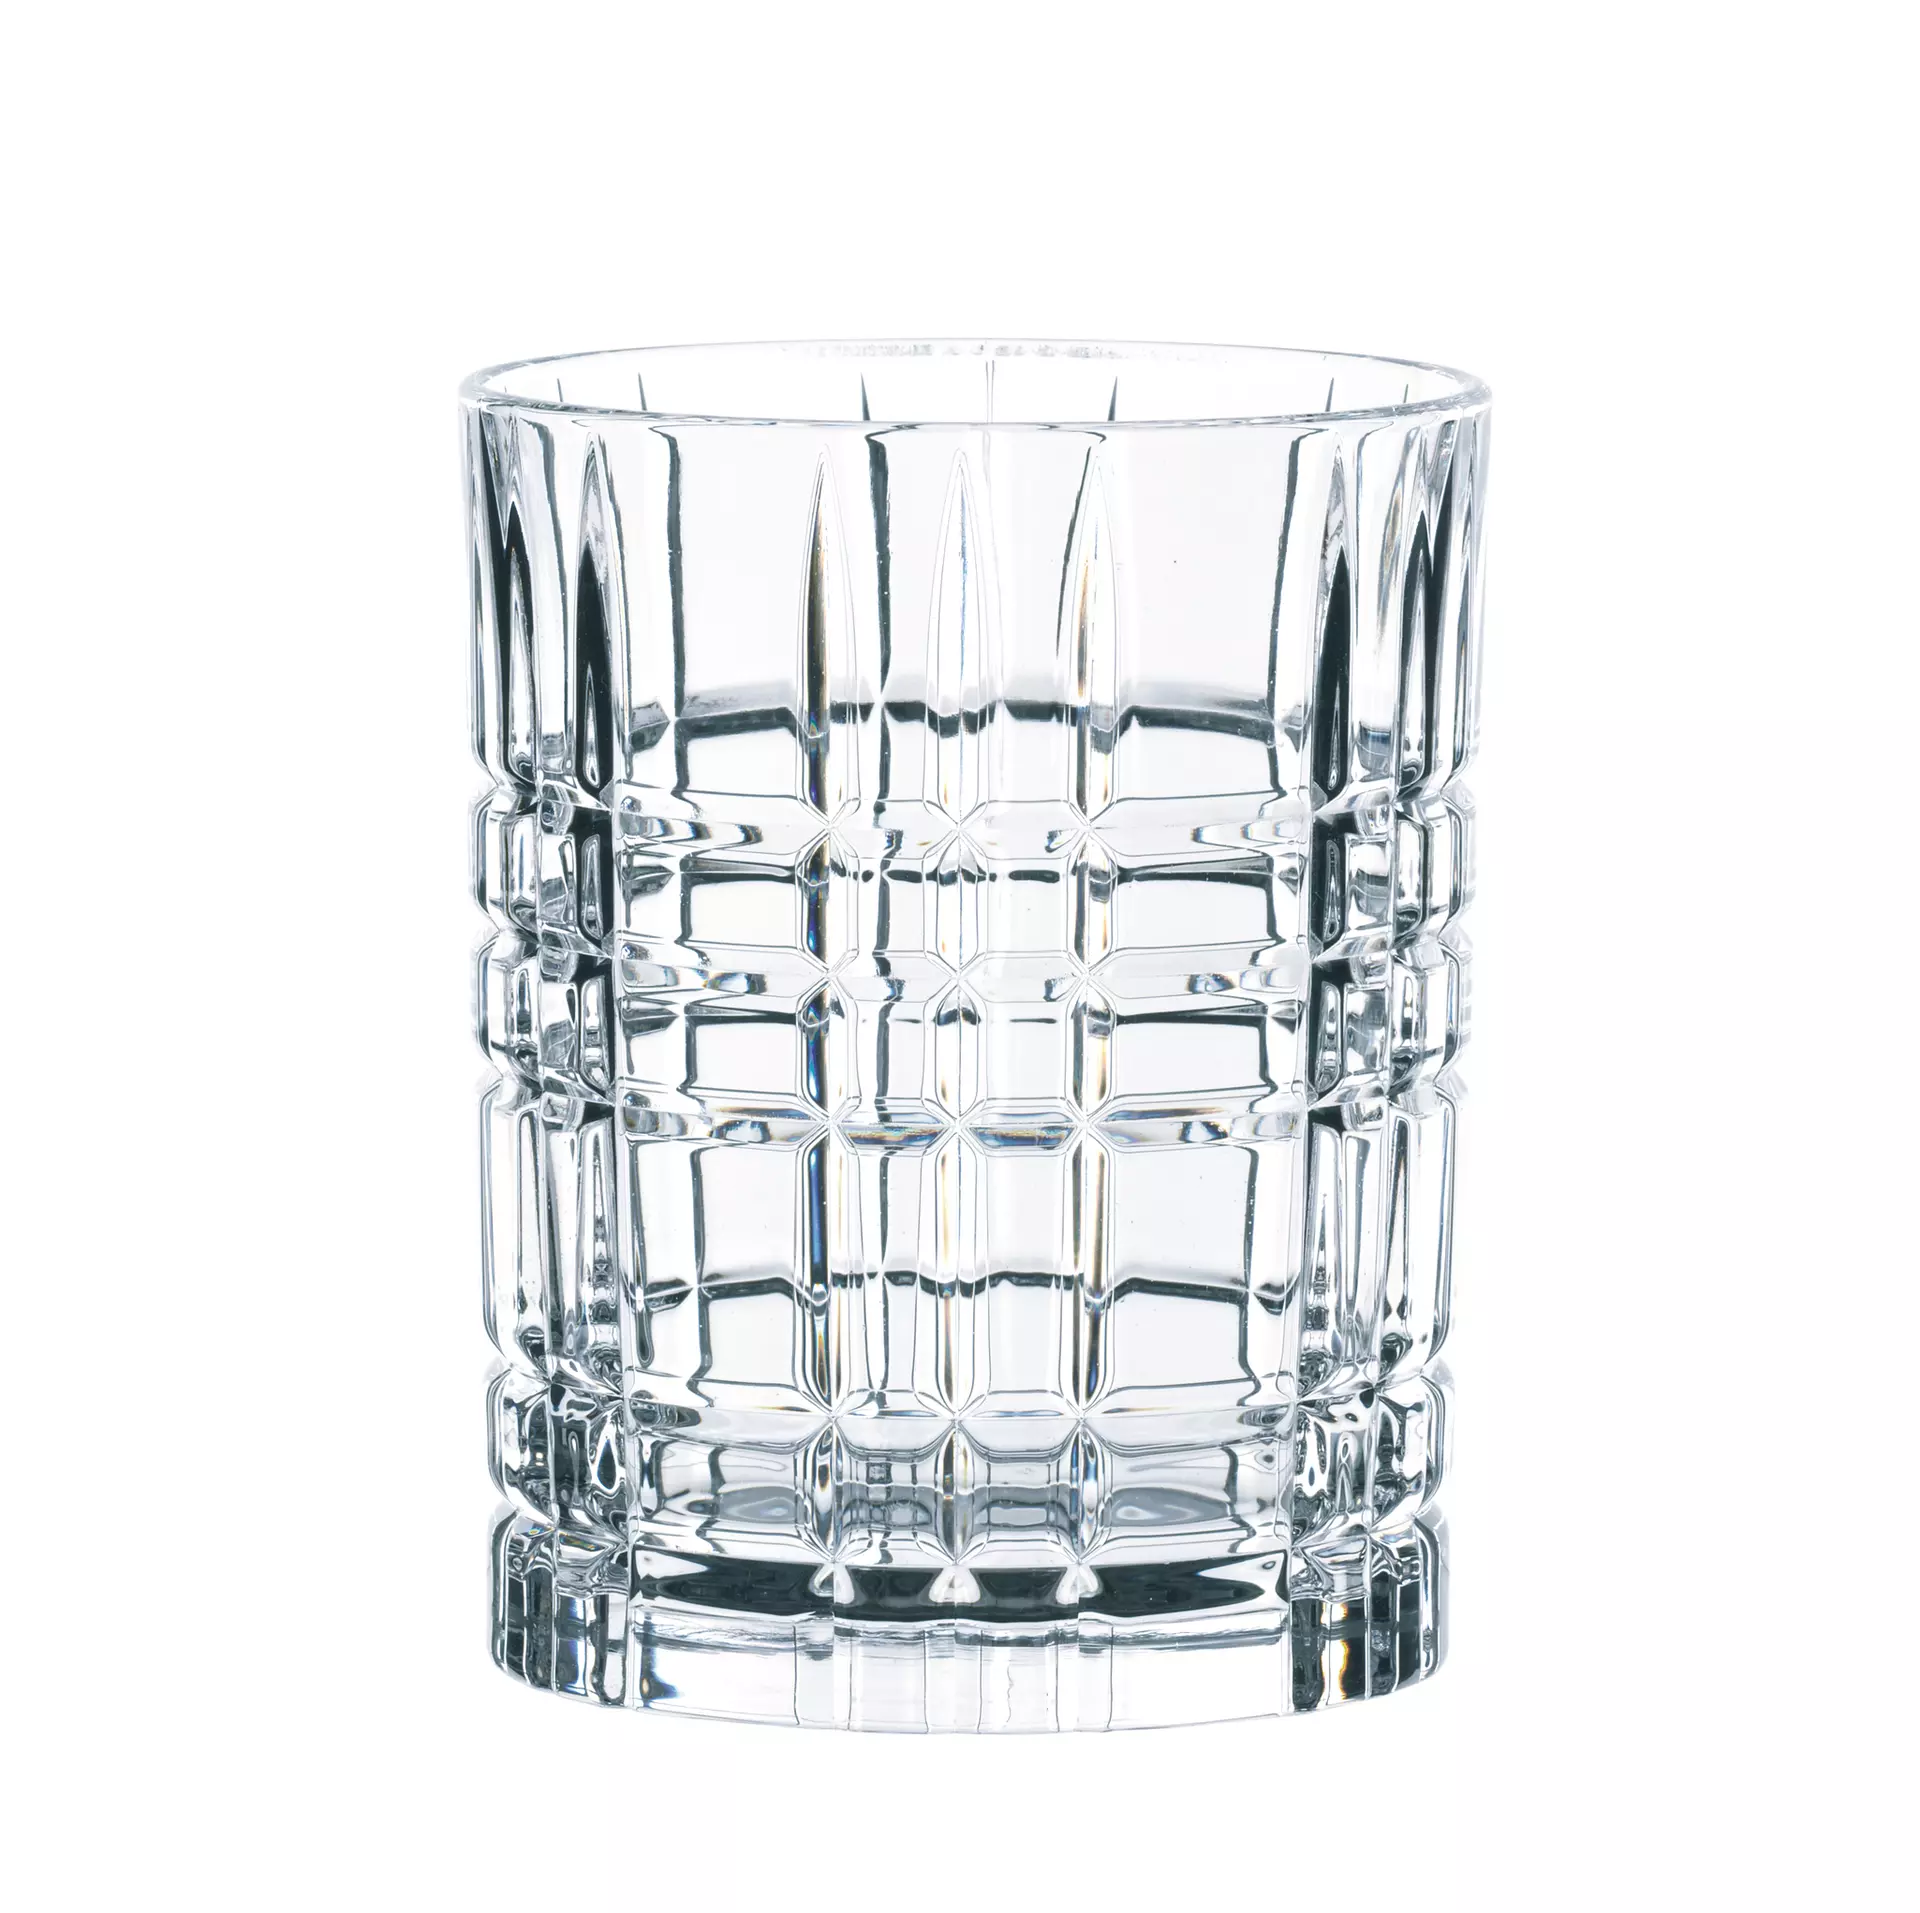 Aperitifglas Tastes Good Nachtmann Glas 8 x 10 x 8 cm